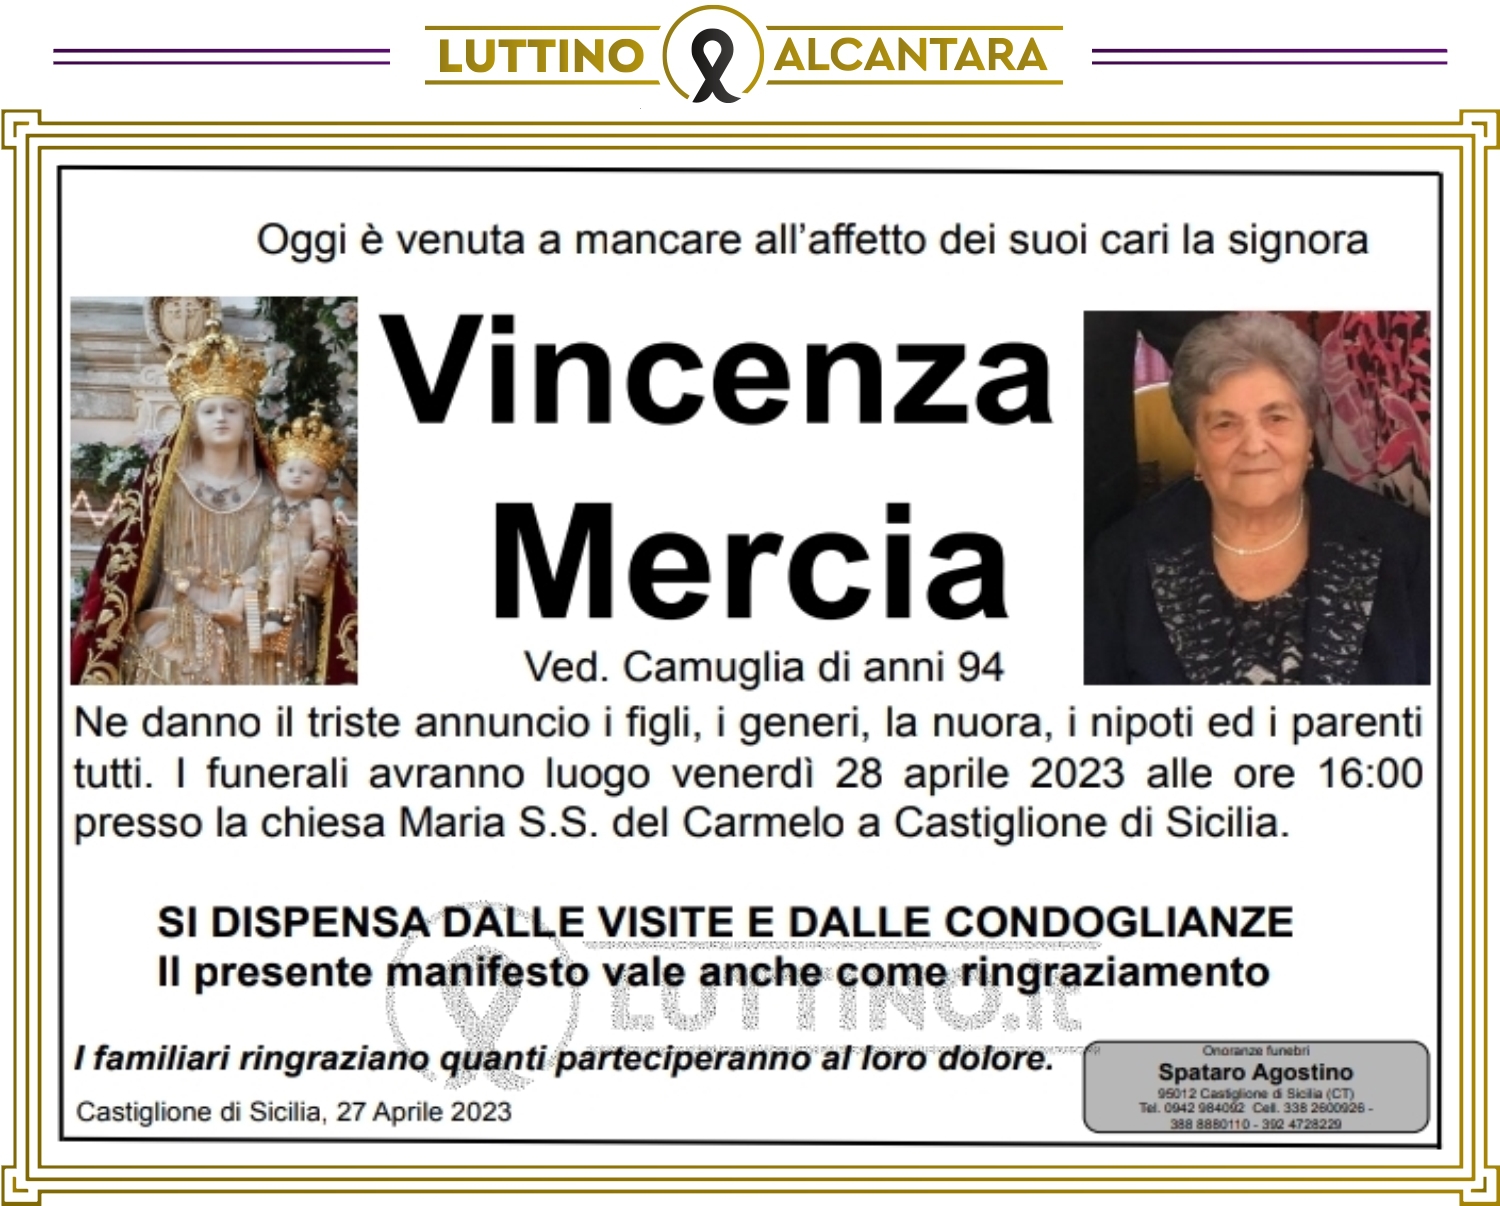 Vincenza Mercia